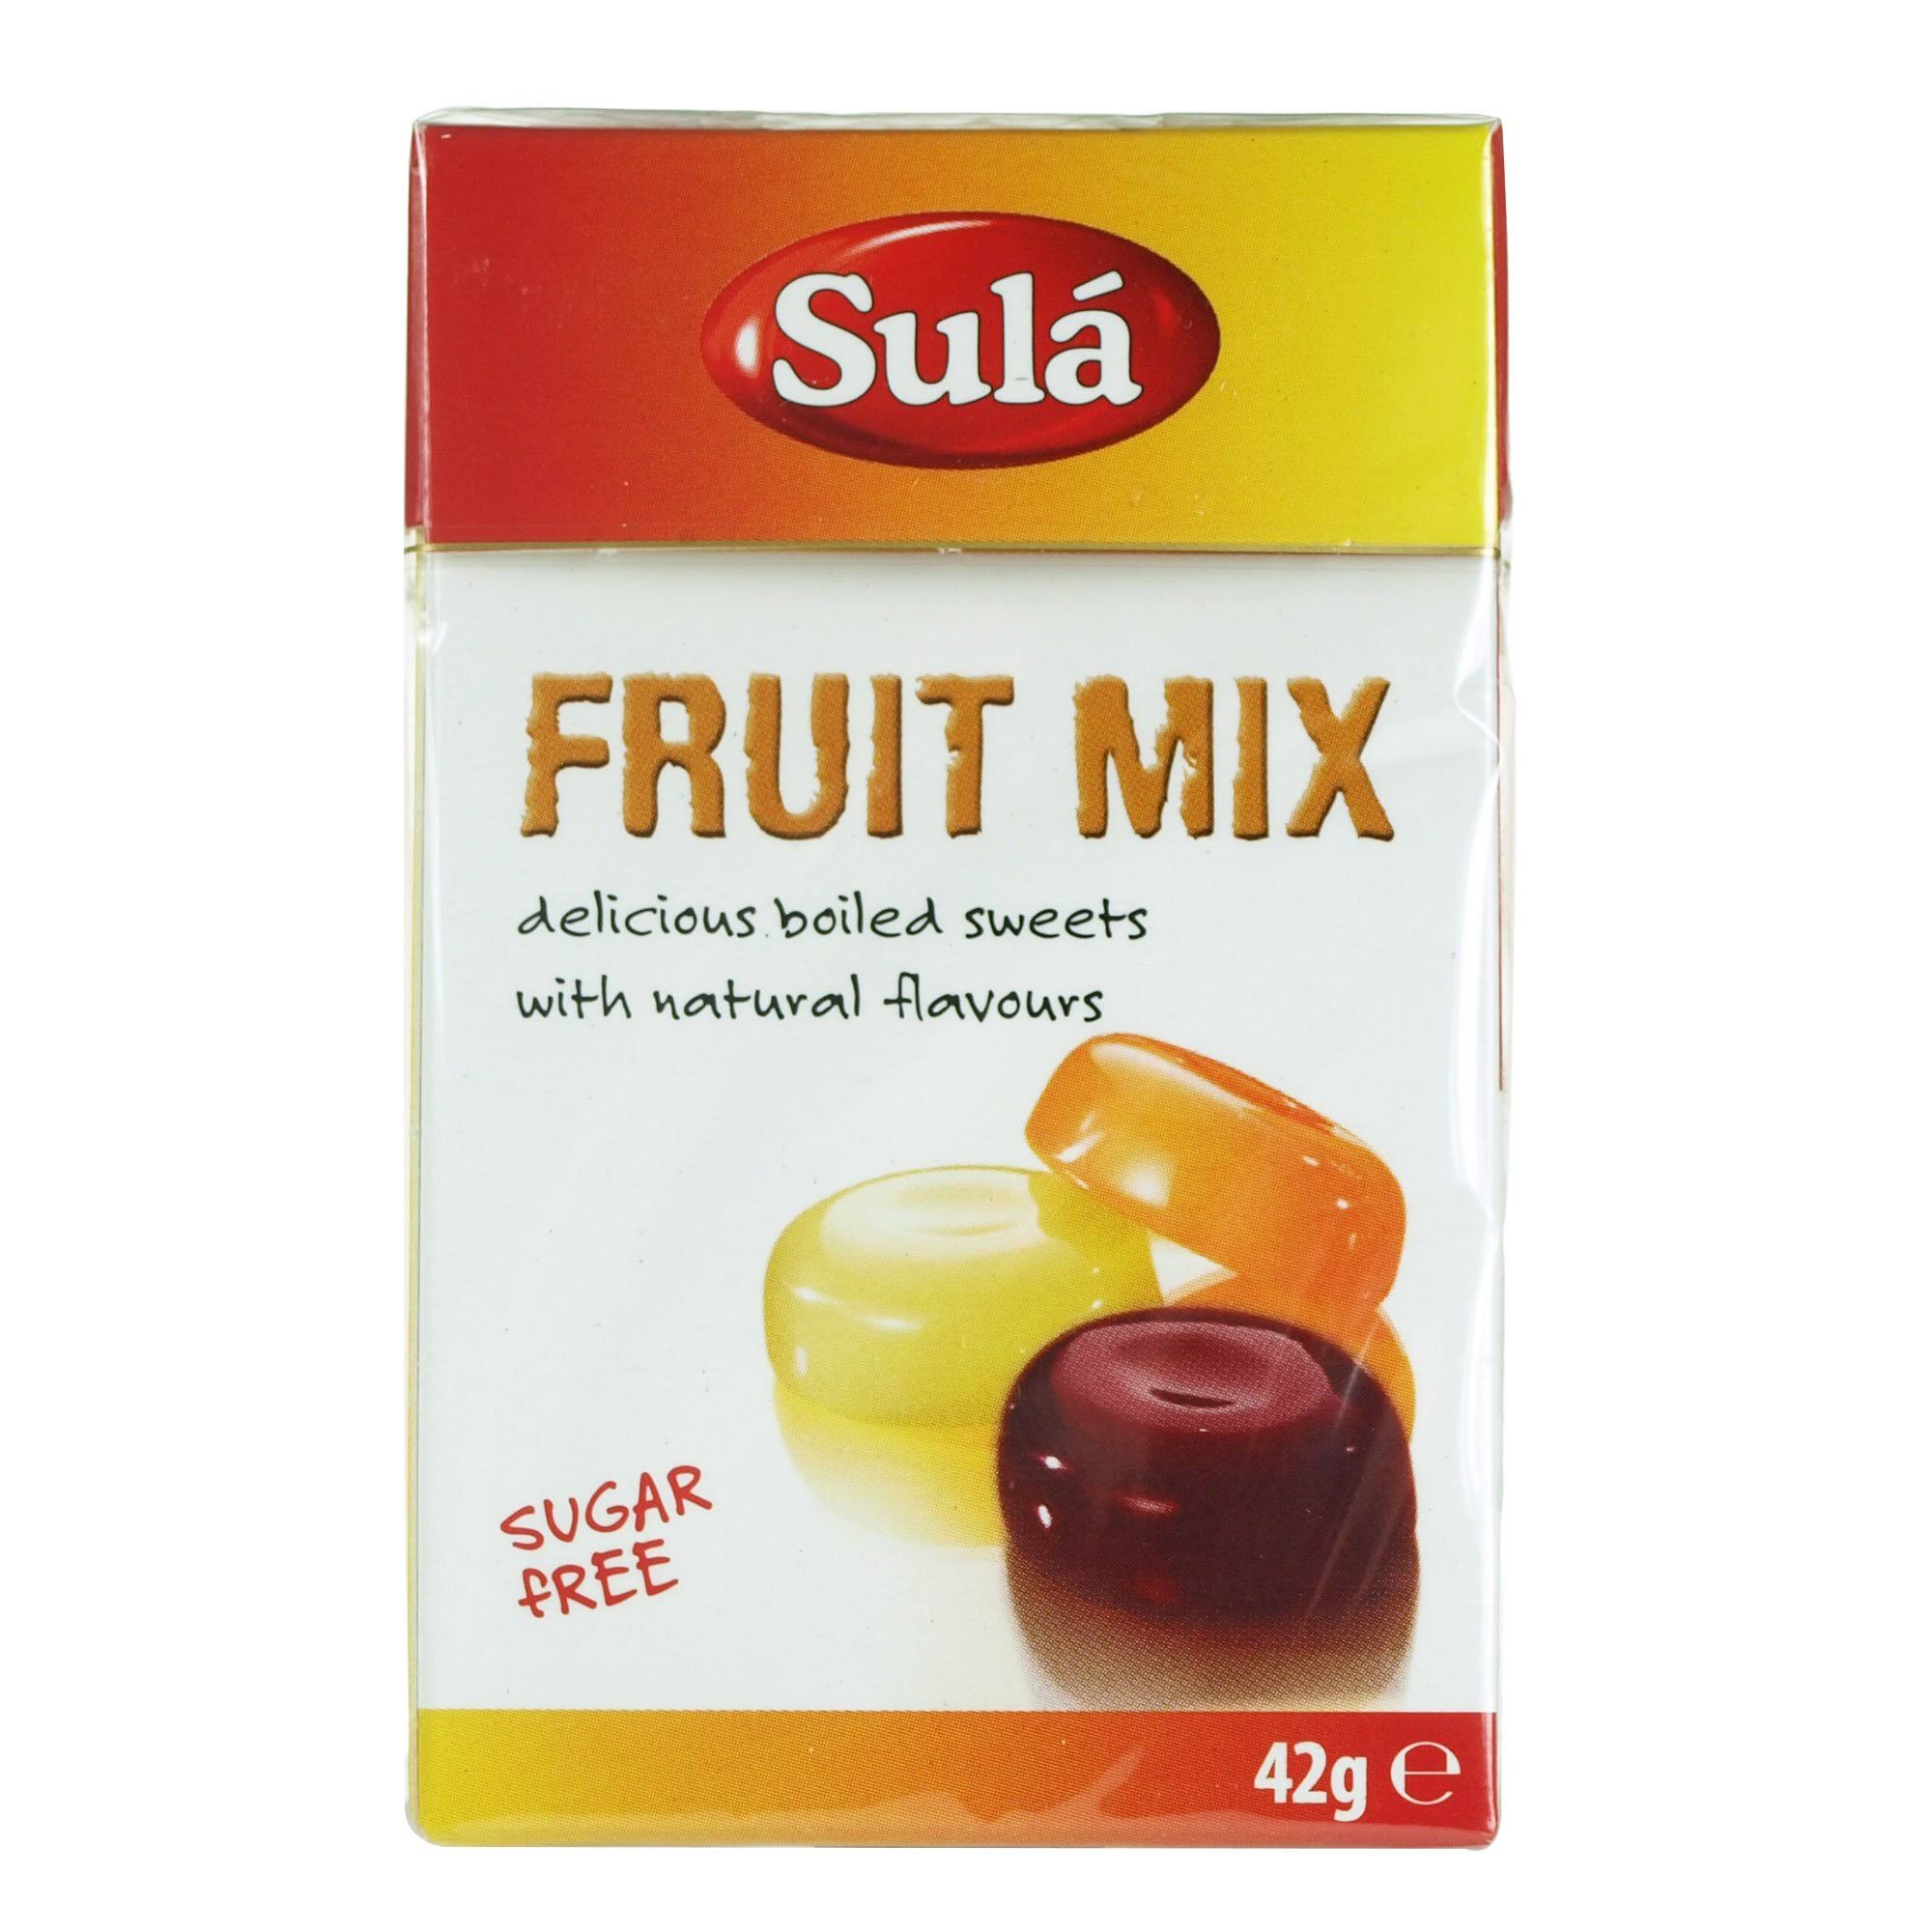 Sula Fruit Mix Sweets - 42g Sugar Free